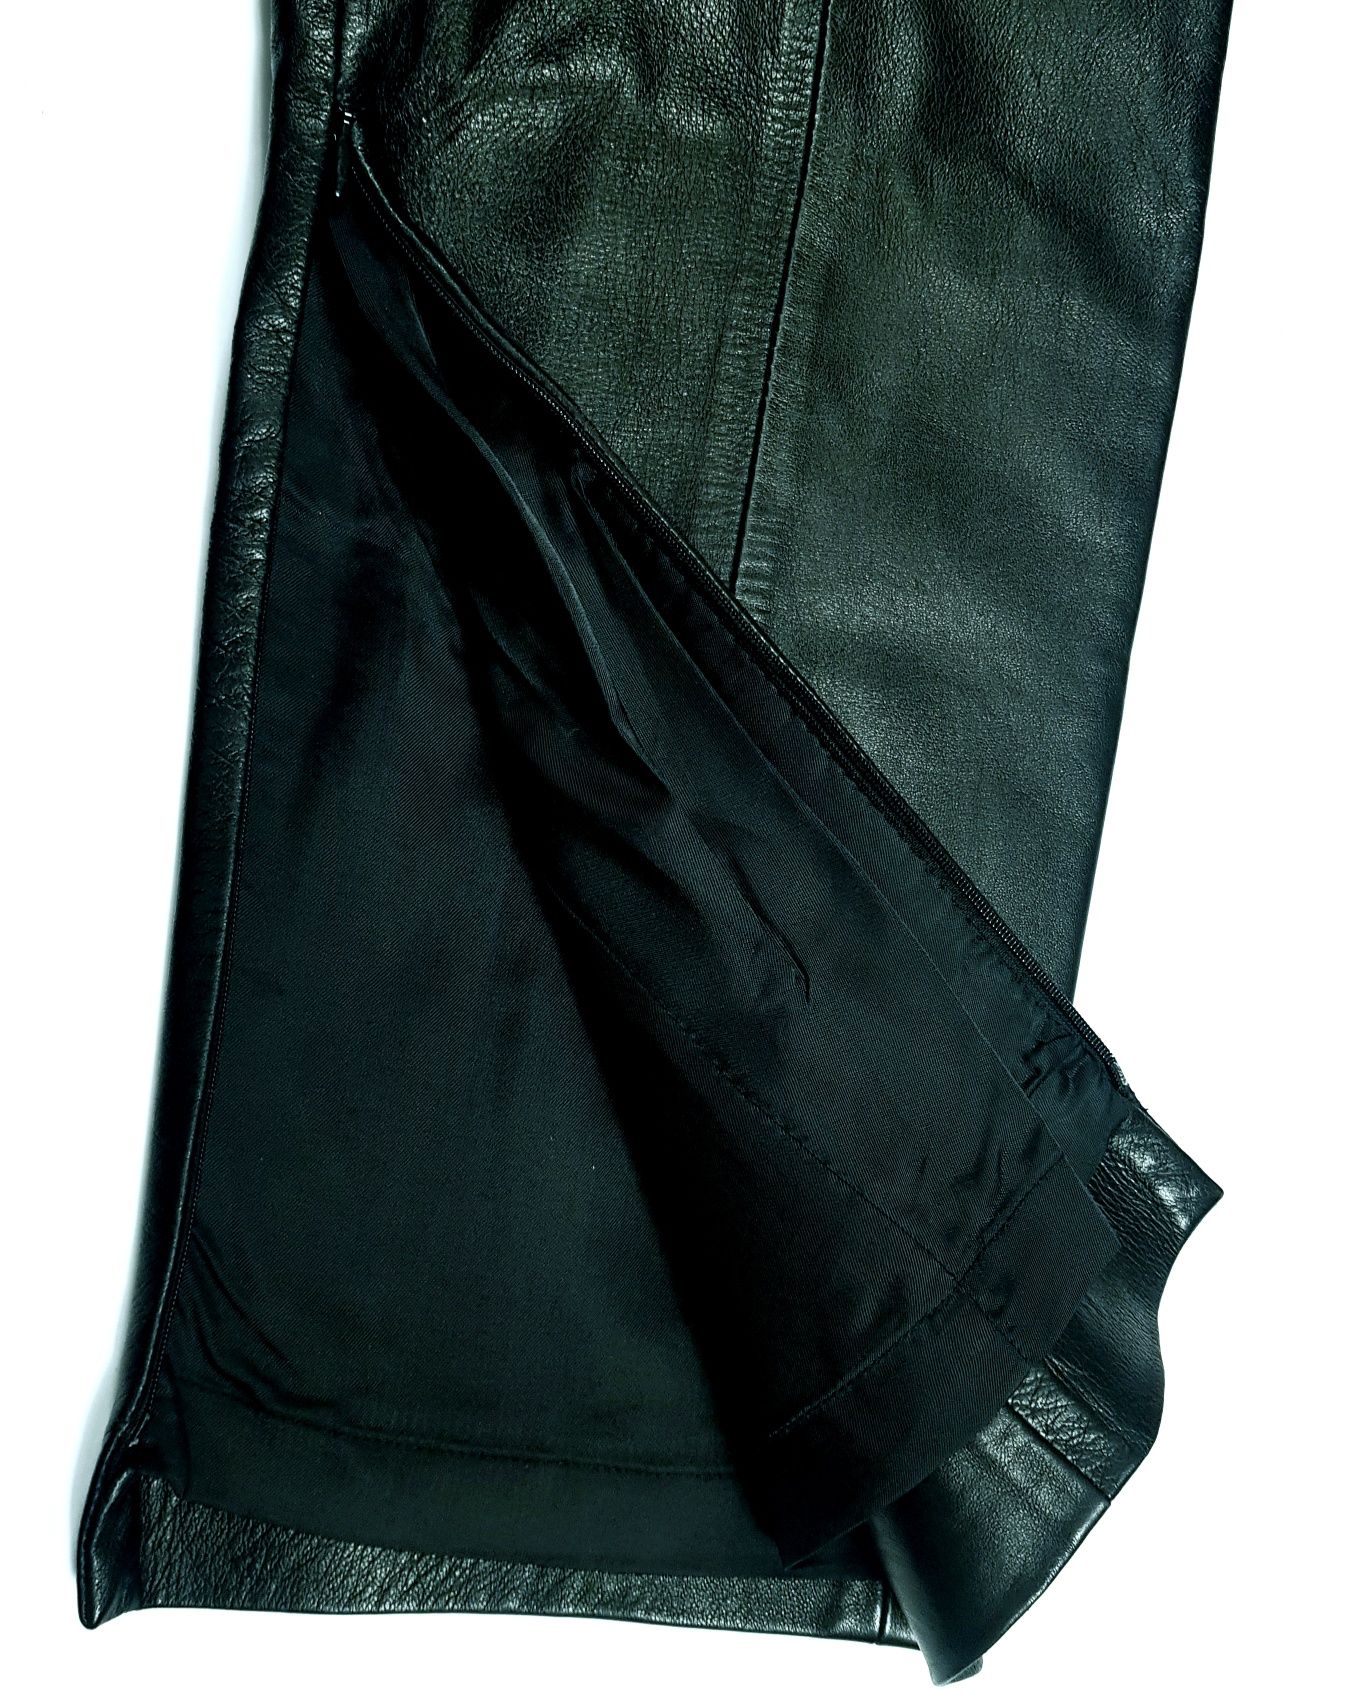 Mugler damskie spodnie skorzane Made in Italy rozmiar 42